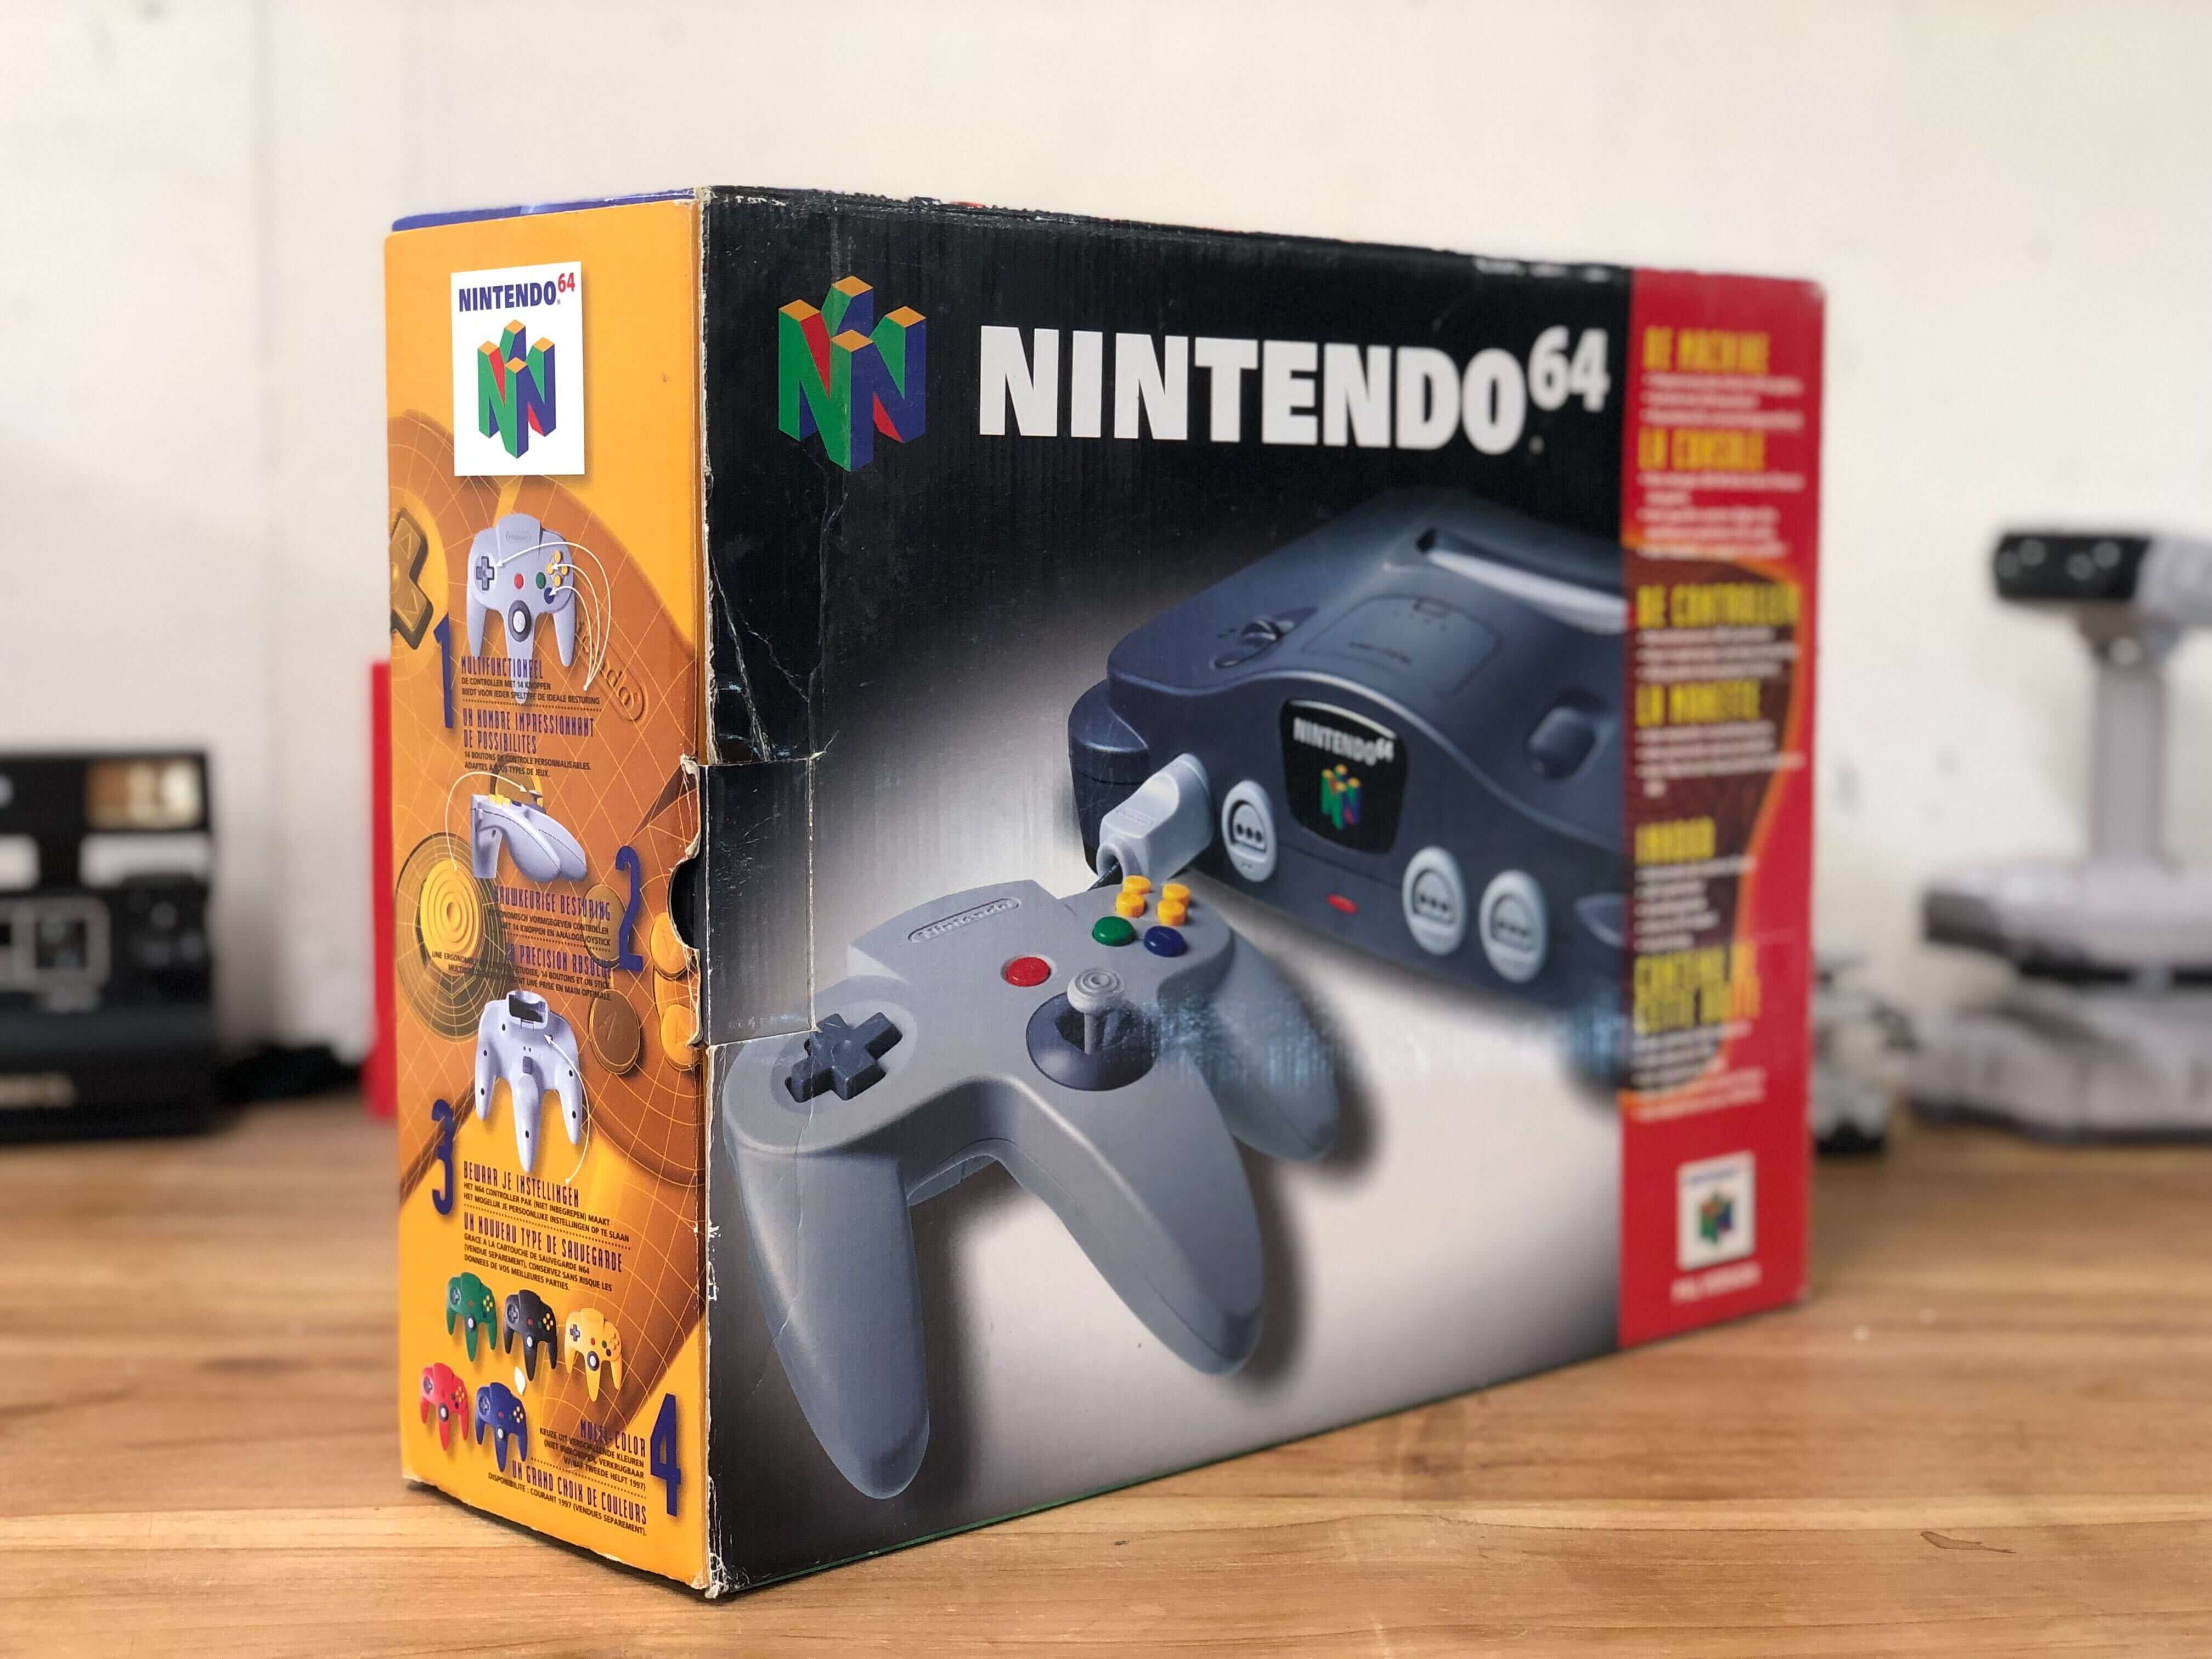 Nintendo 64 Starter Pack - Control Deck Edition [Complete] Kopen | Nintendo 64 Hardware